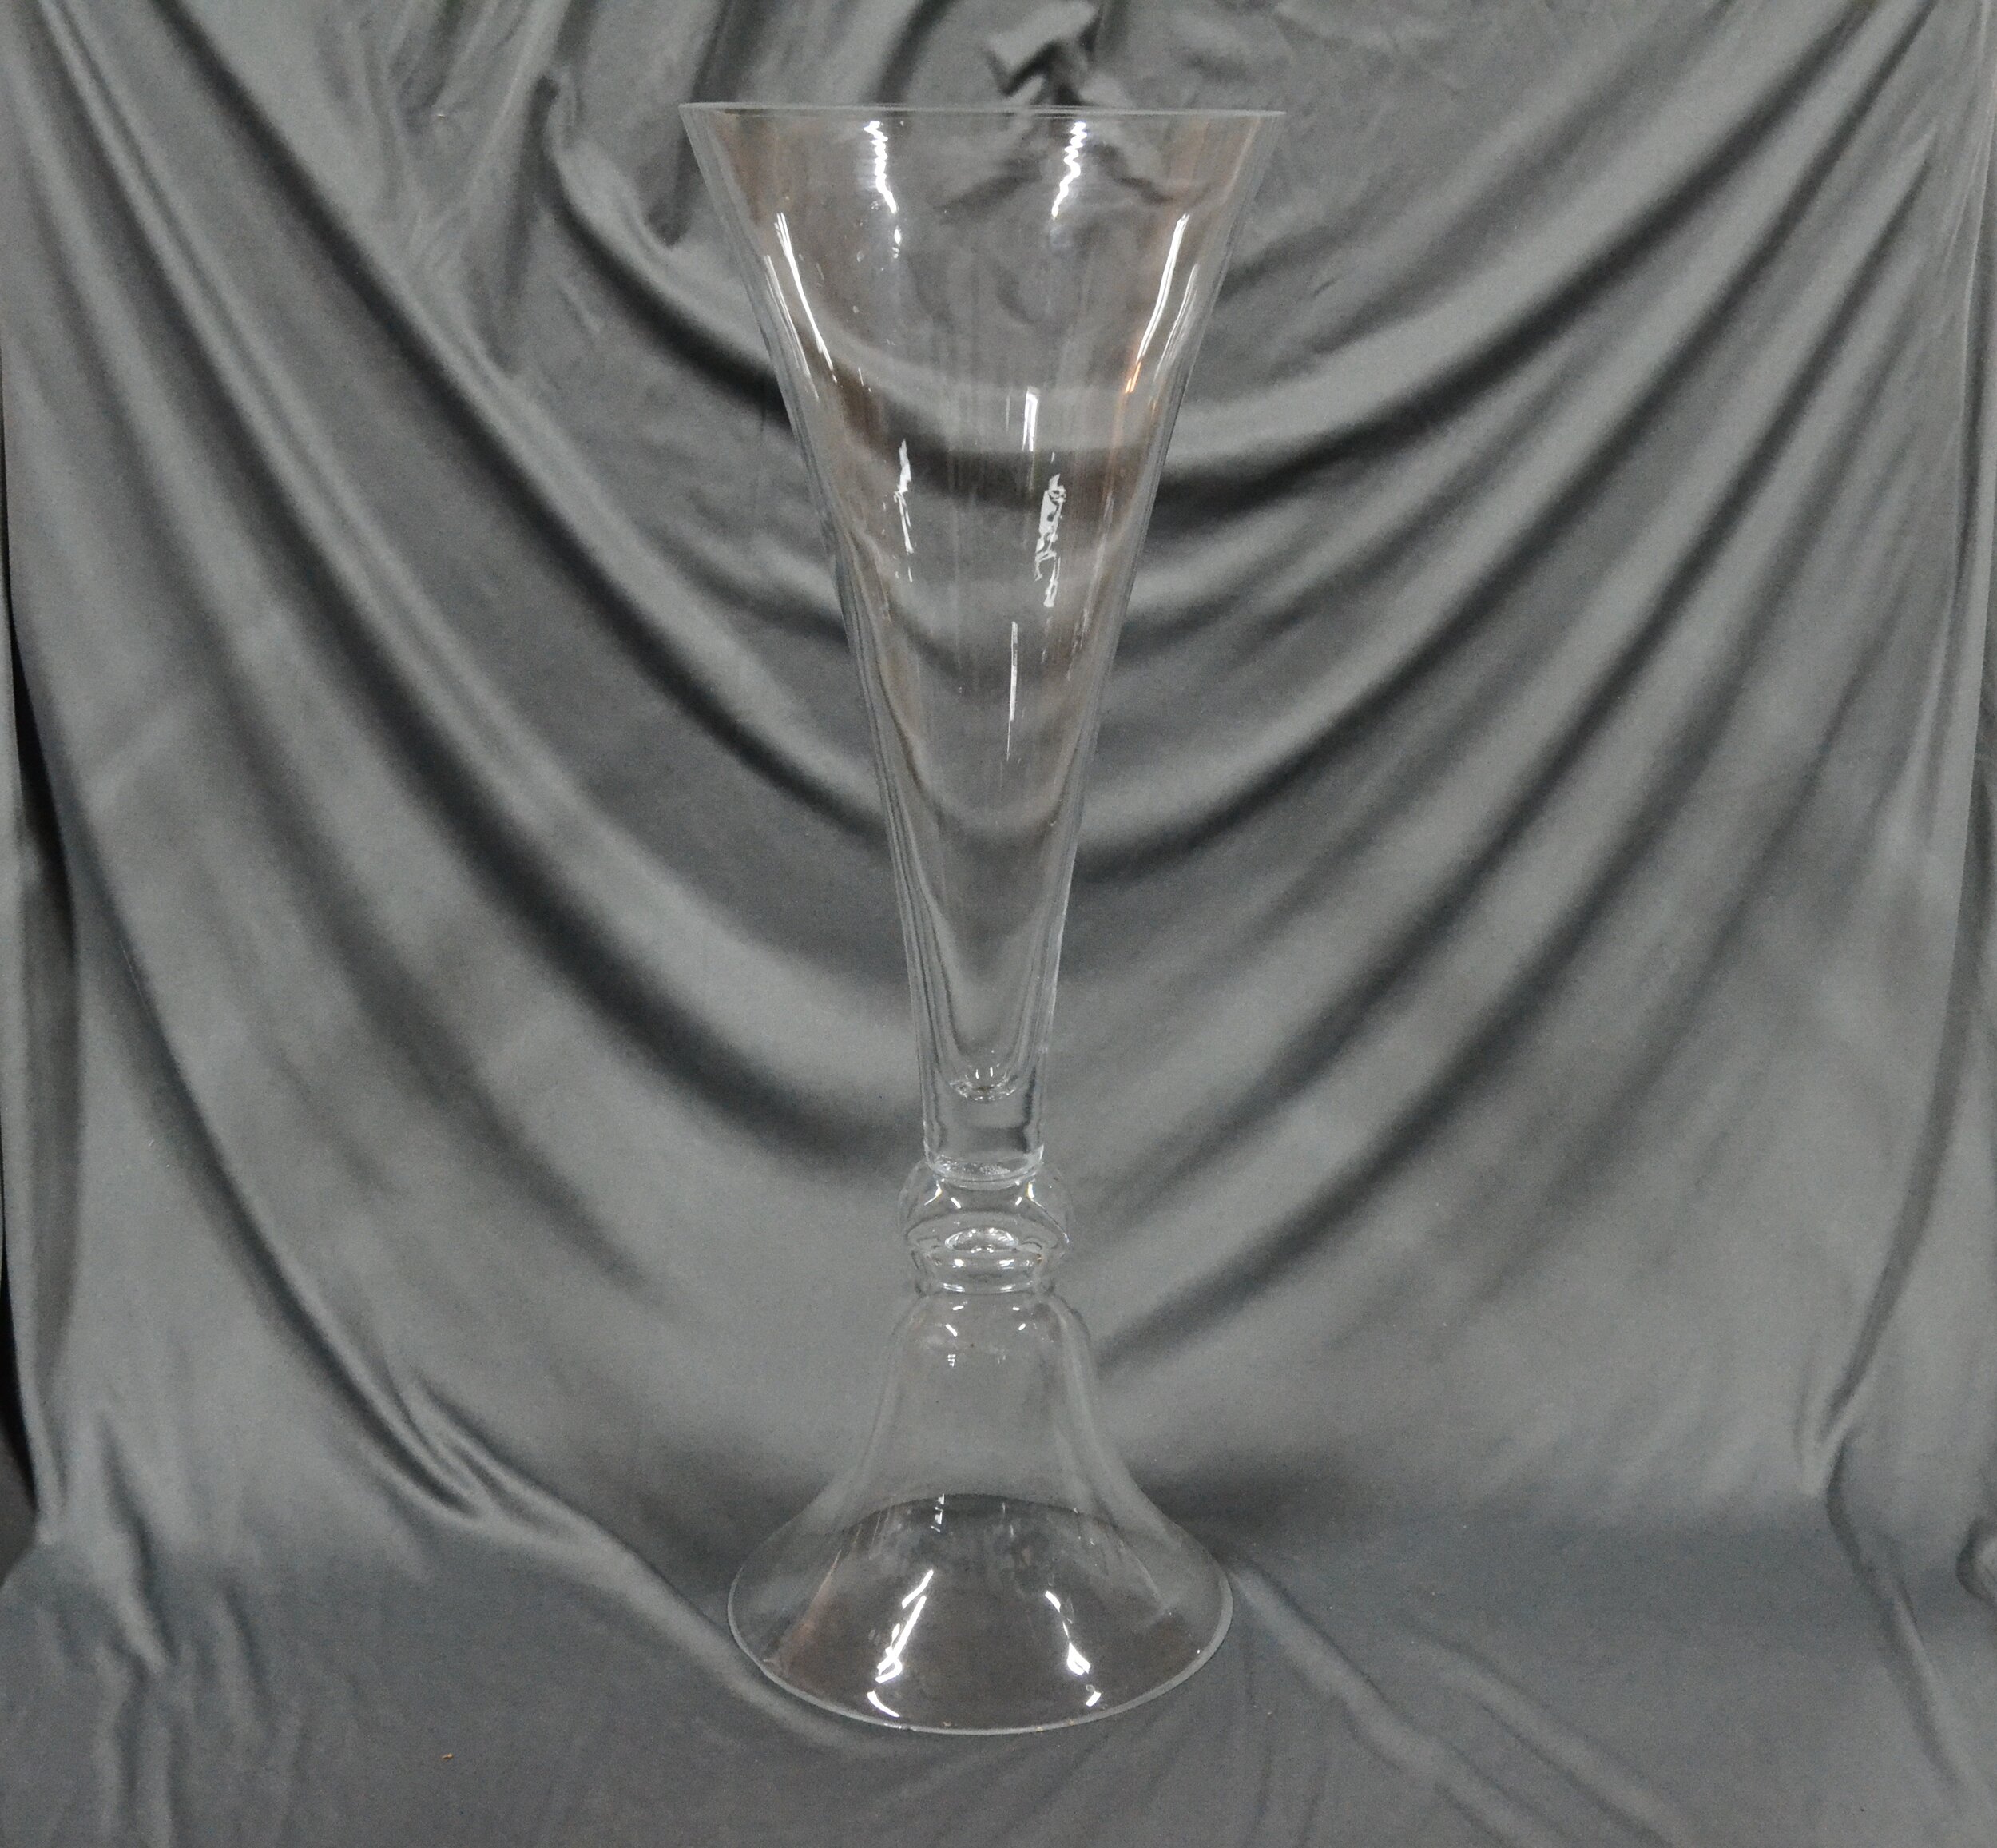 Clarinet Vase